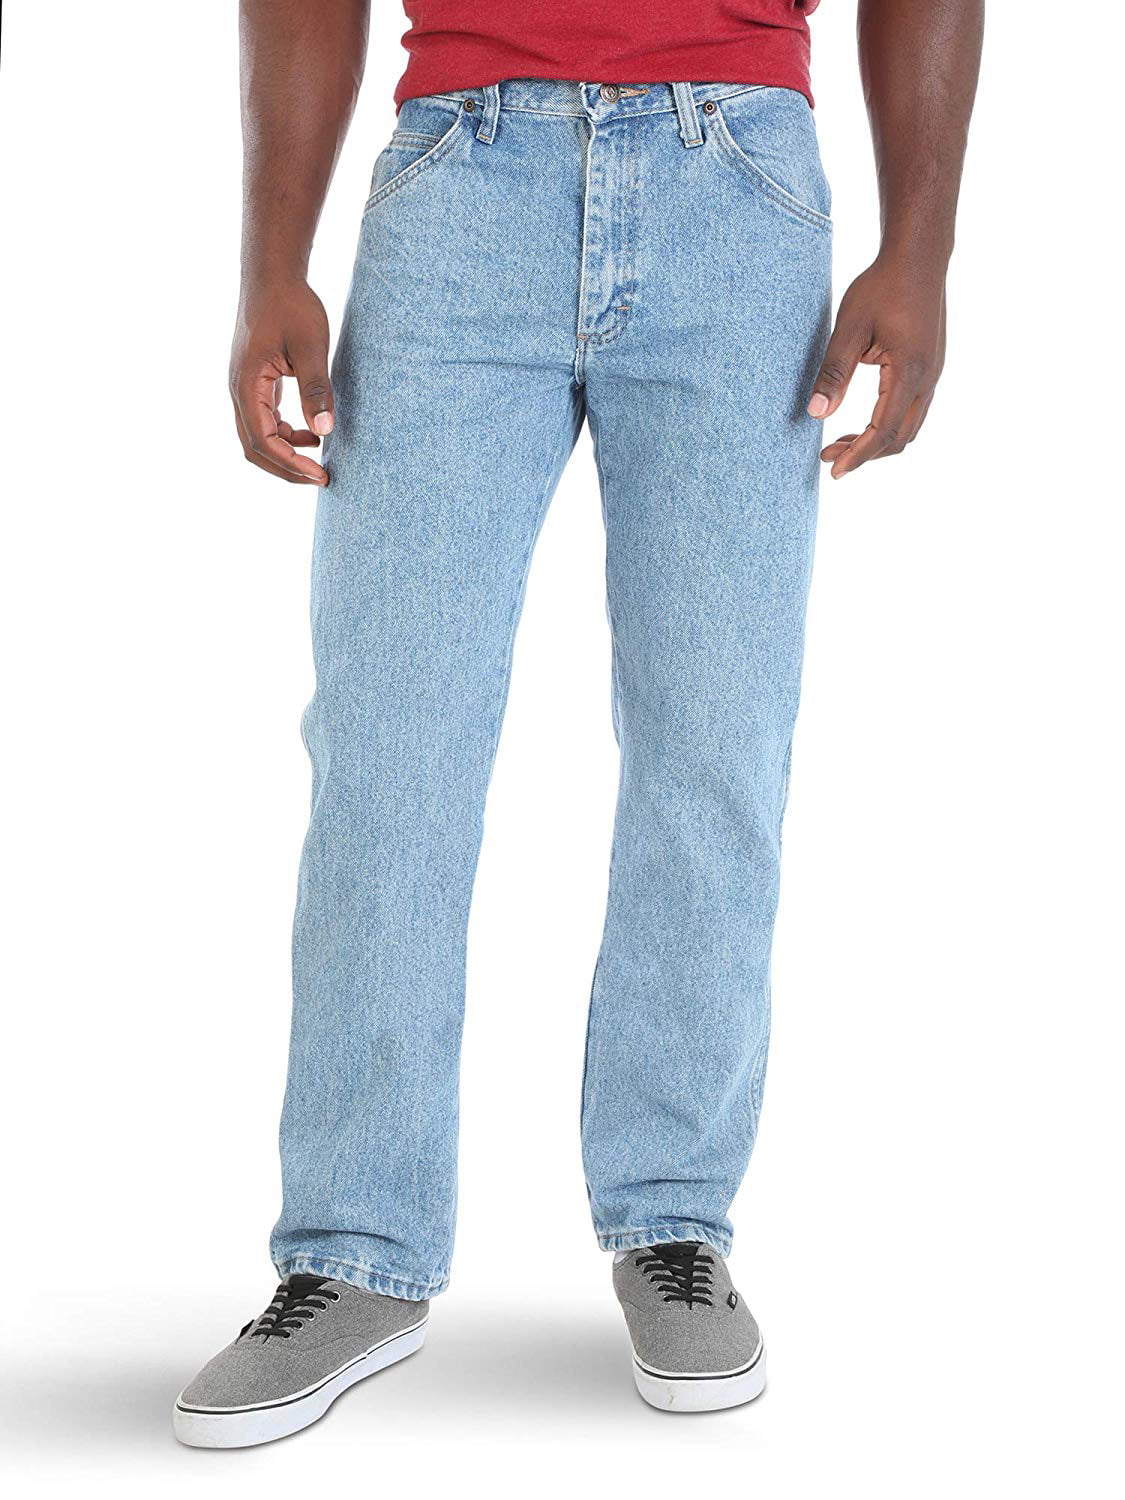 walmart wrangler jeans regular fit